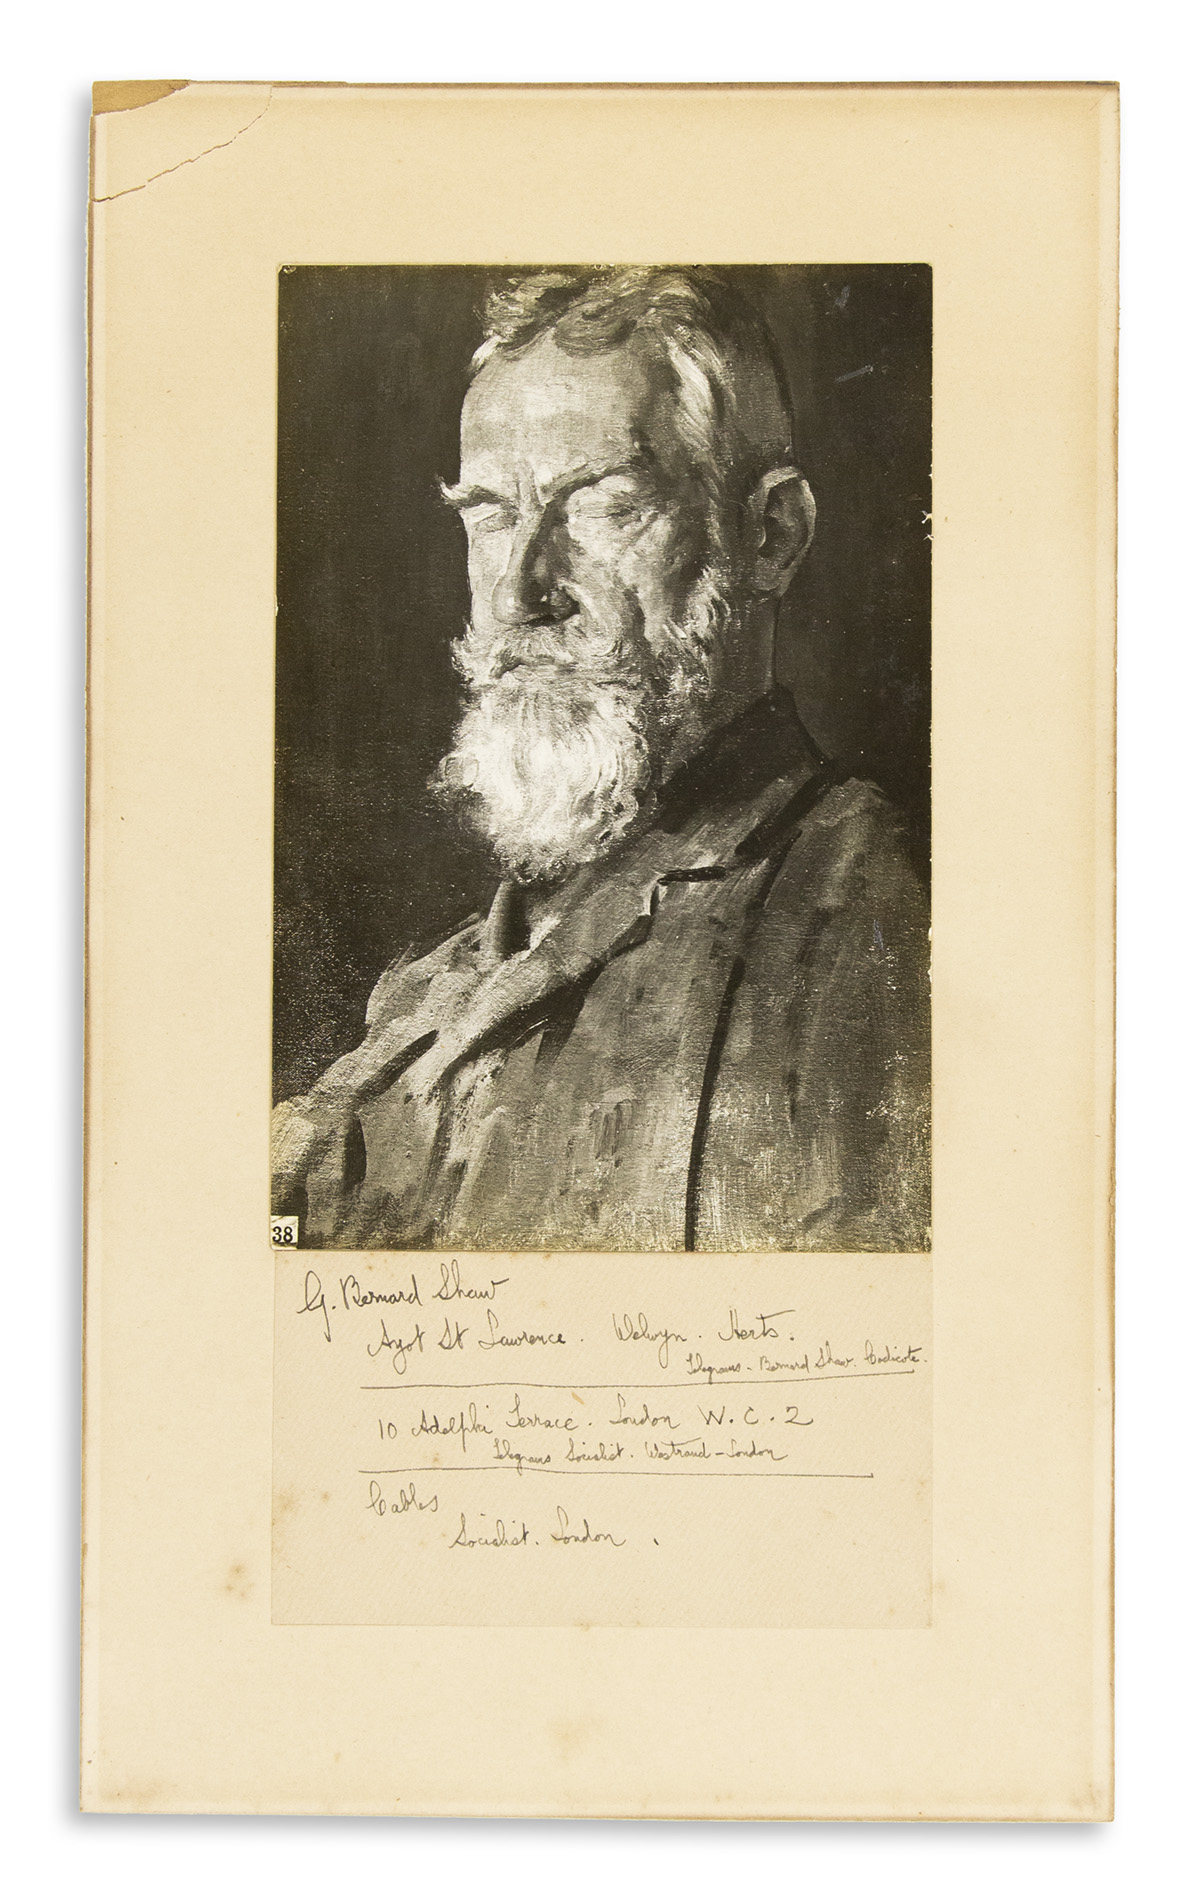 SHAW, GEORGE BERNARD. Autograph Manuscript Signed, G. Bernard Shaw, list of his various correspondence addresses in 7 lines,